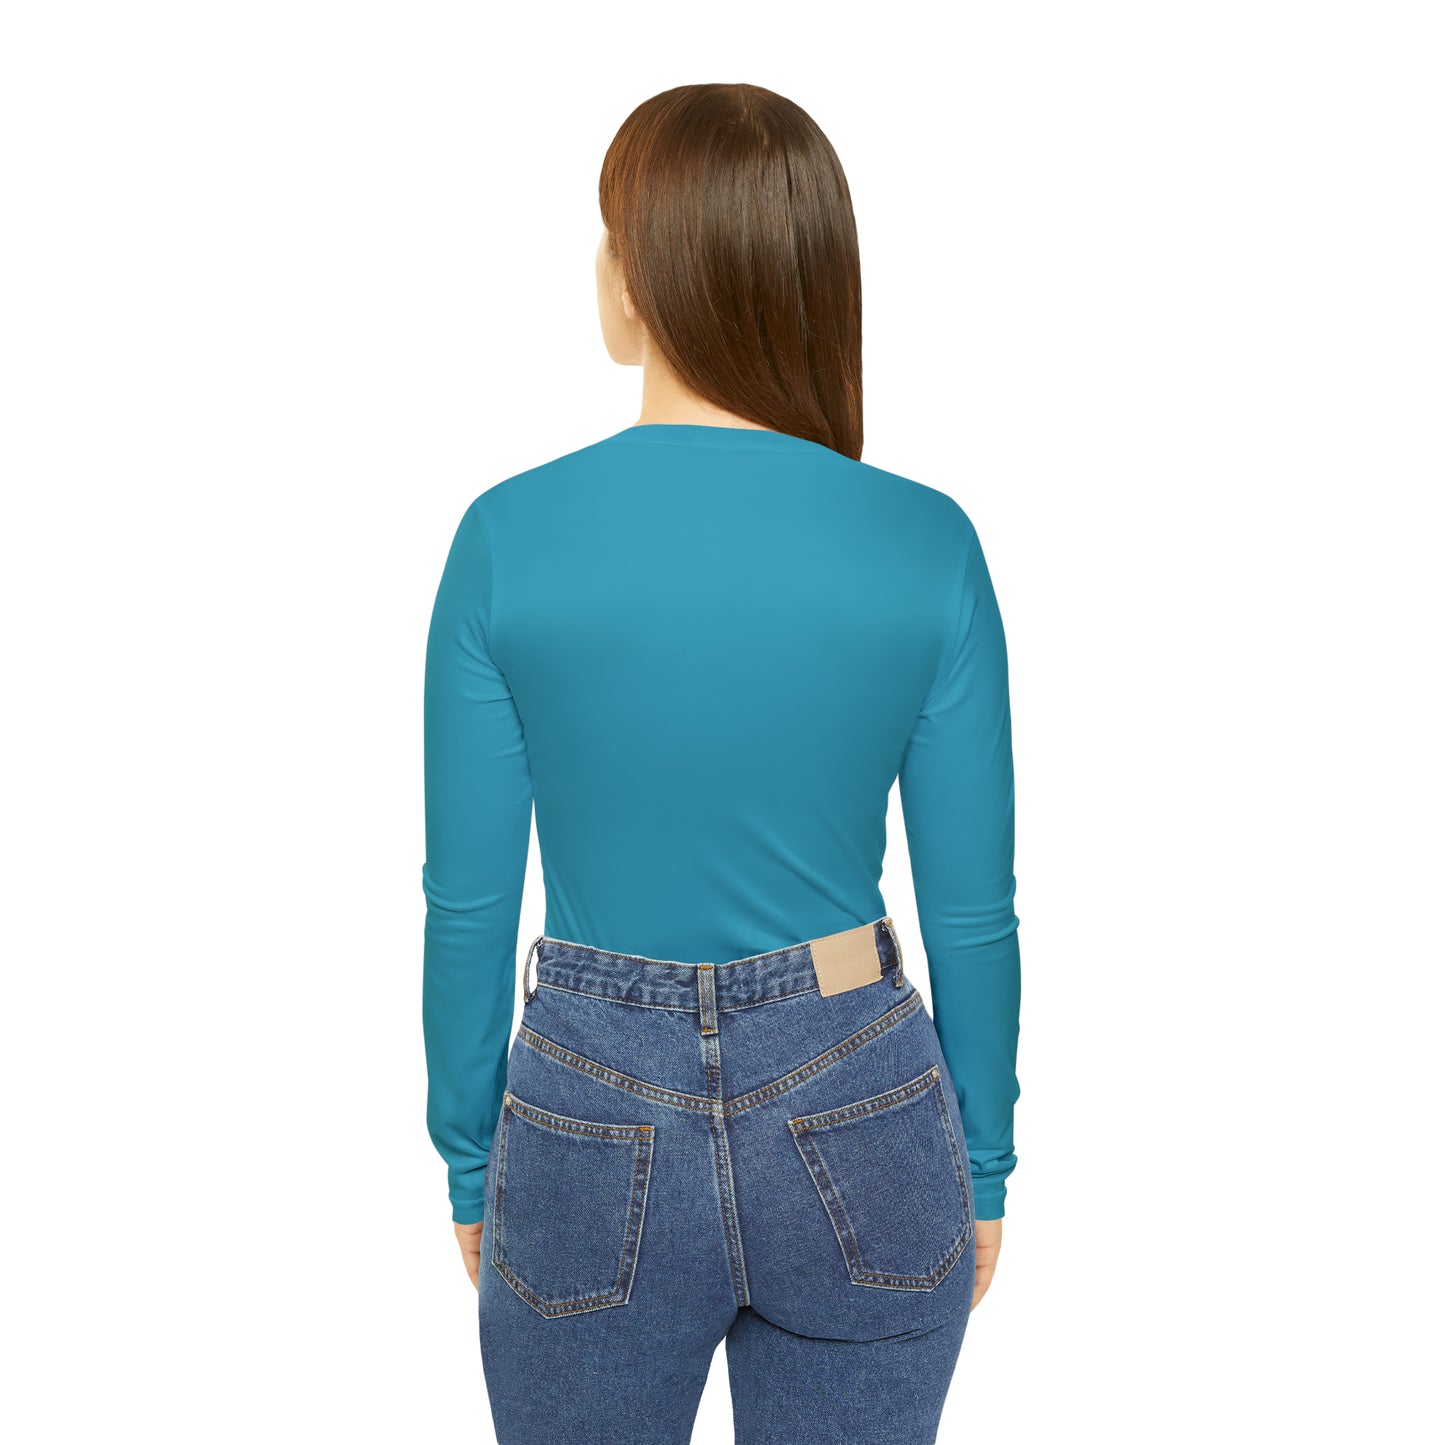 Premium Crap II Women's Long Sleeve V-neck Shirt - Turquoise